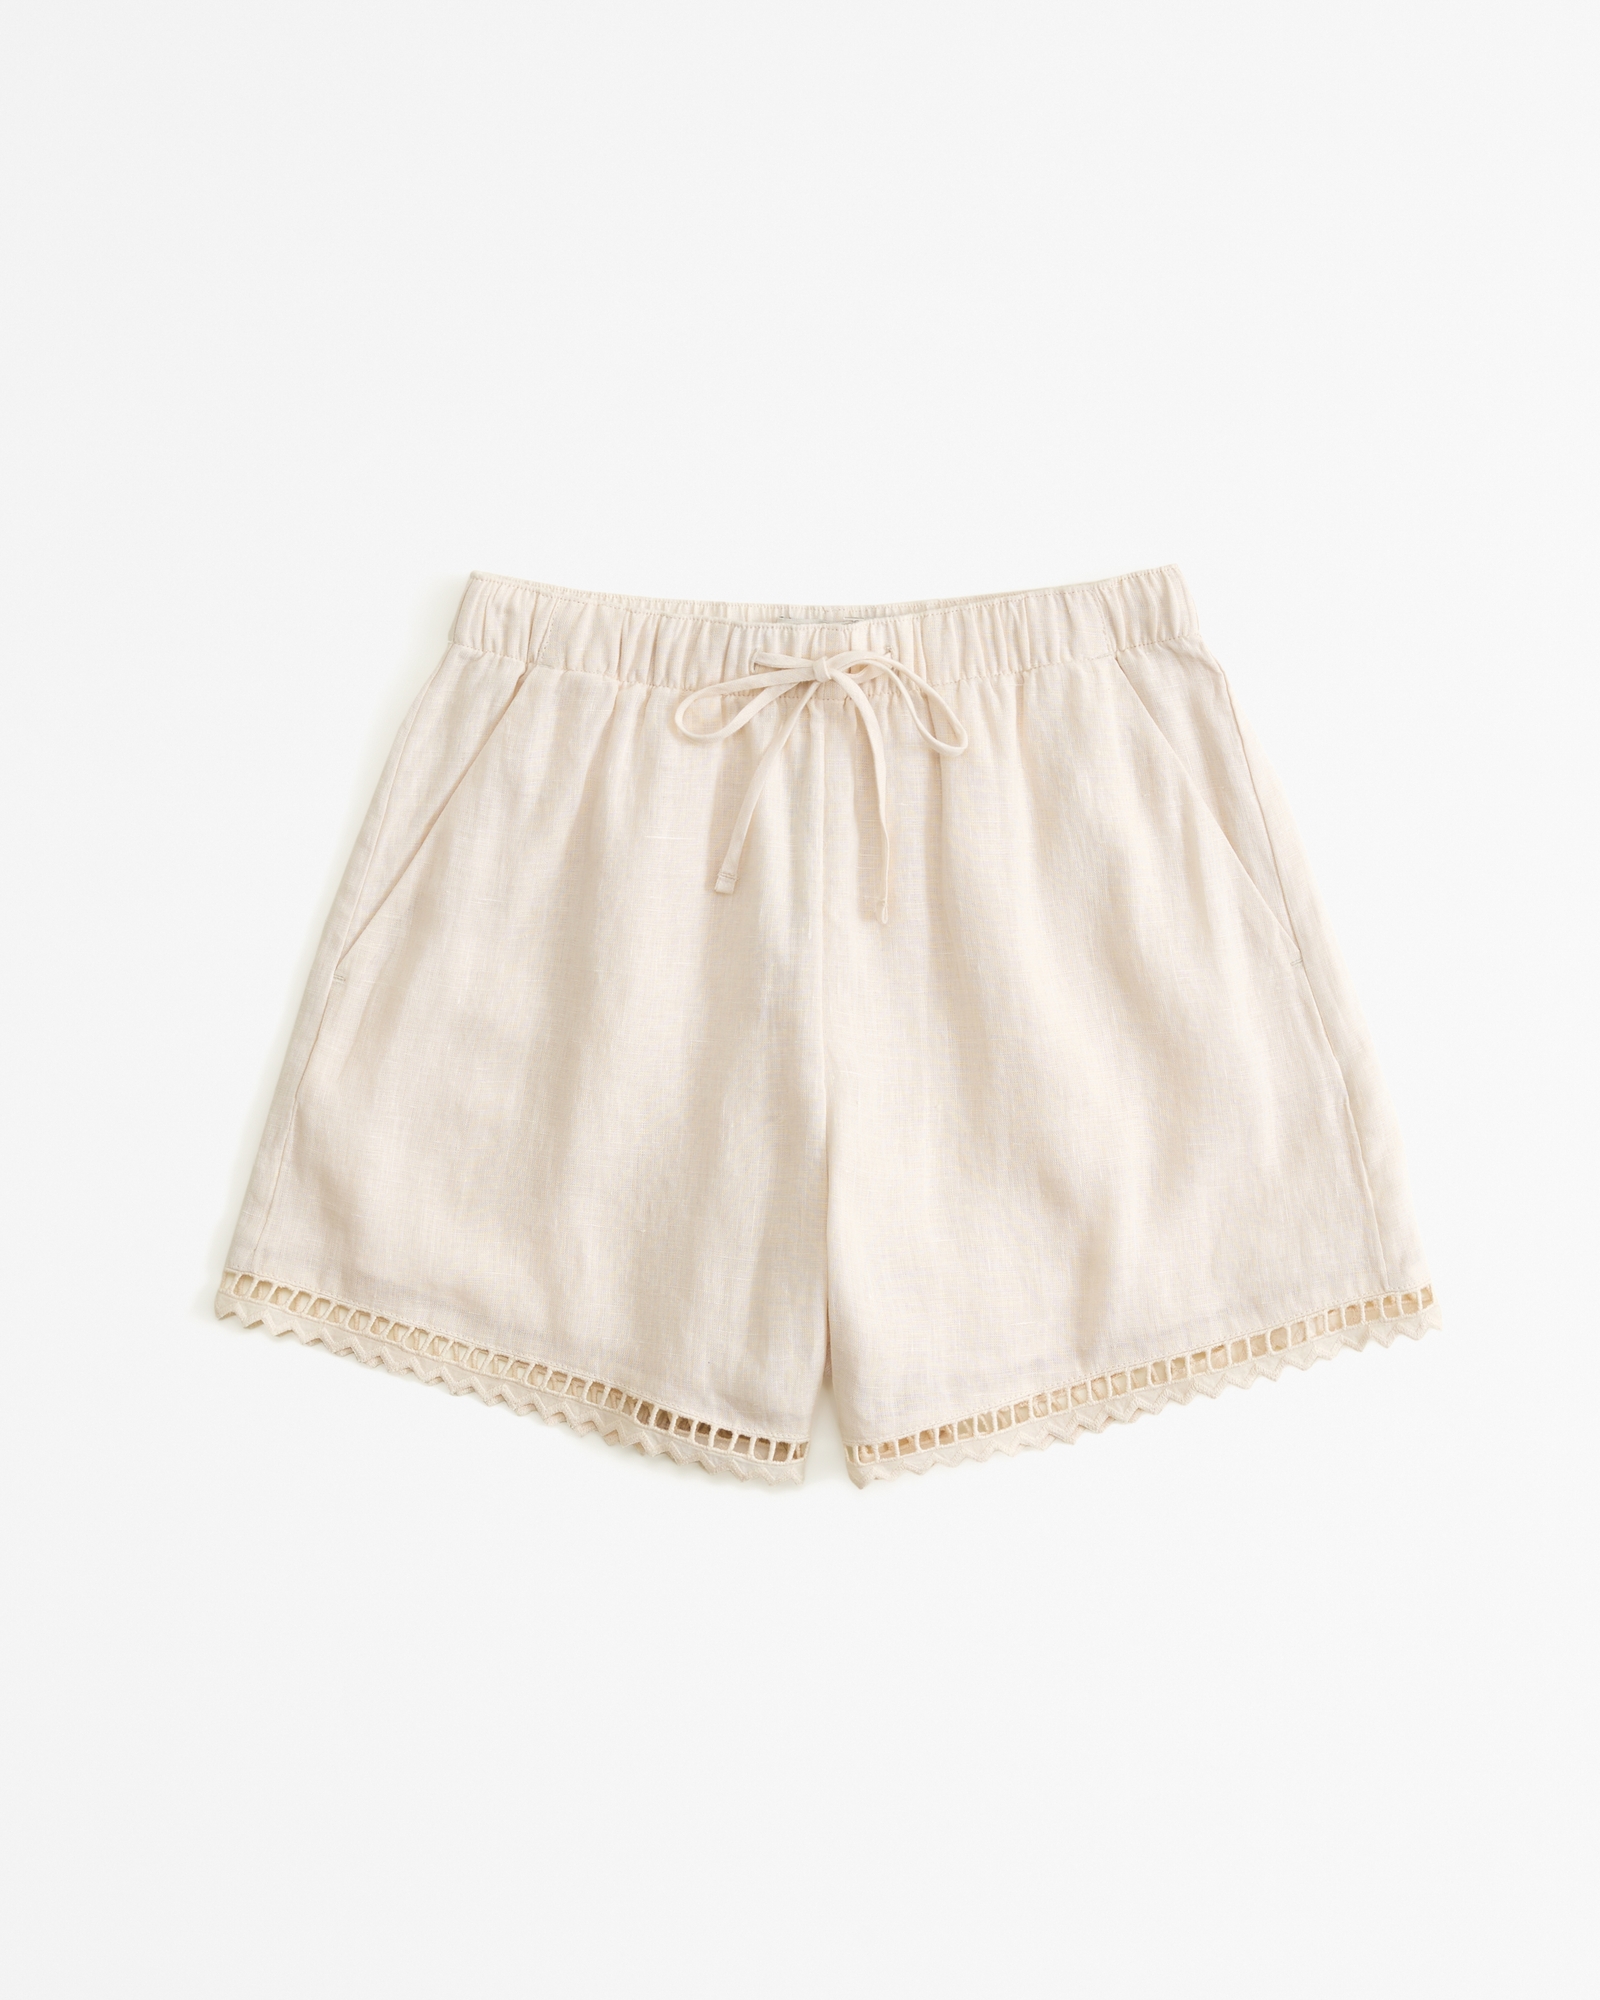 linen boxer shorts with wrap around front panels CHERISH womens sleepwear  range - made to order